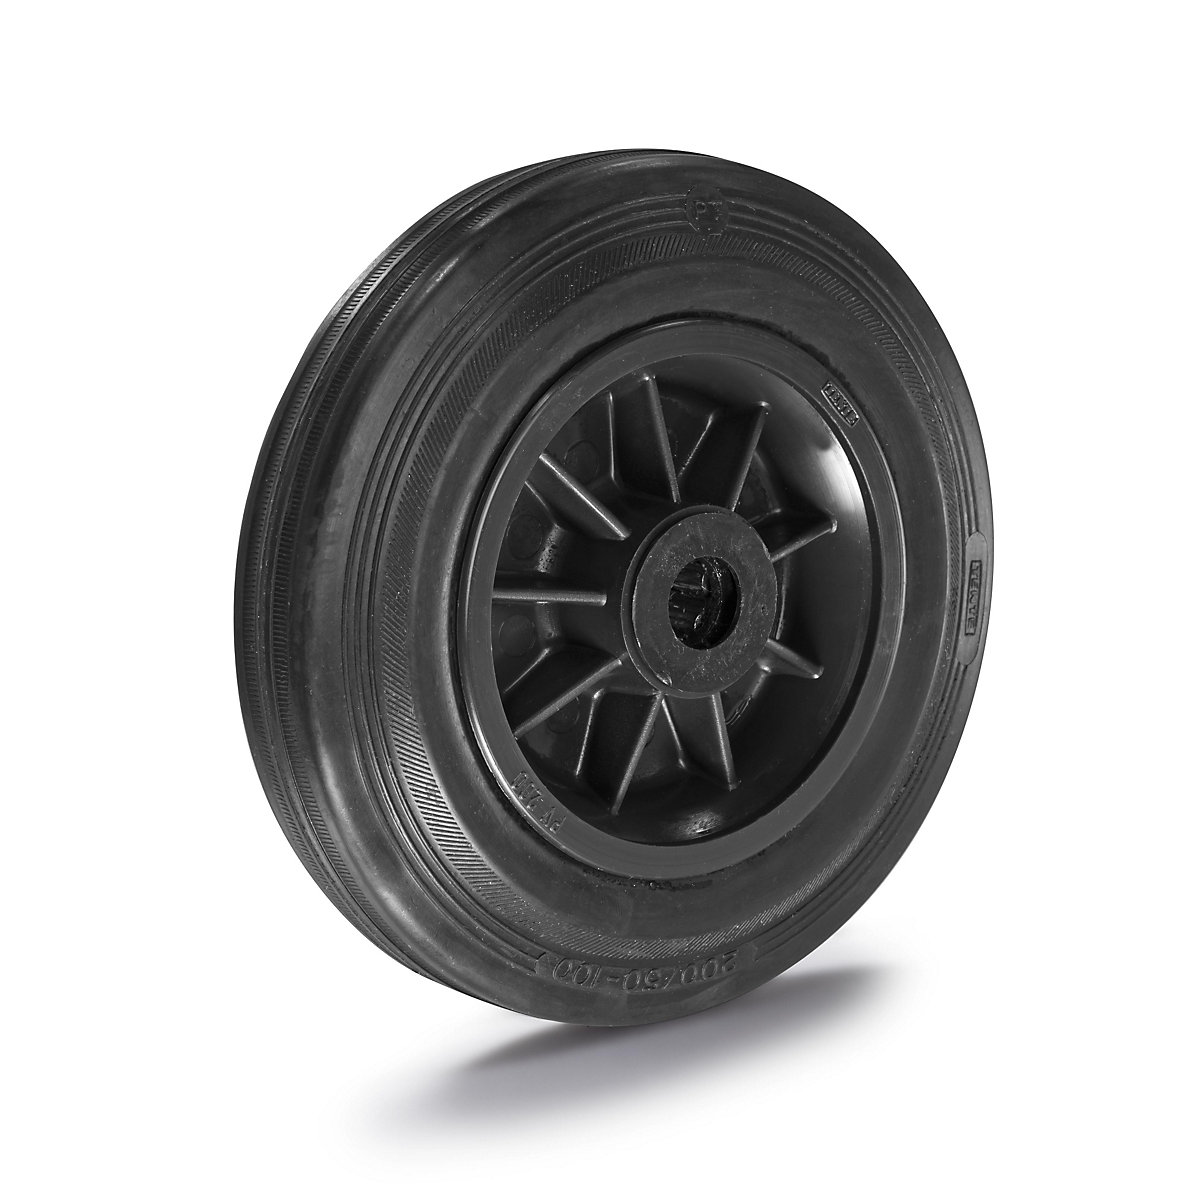 Solid rubber wheel on plastic rim – Proroll